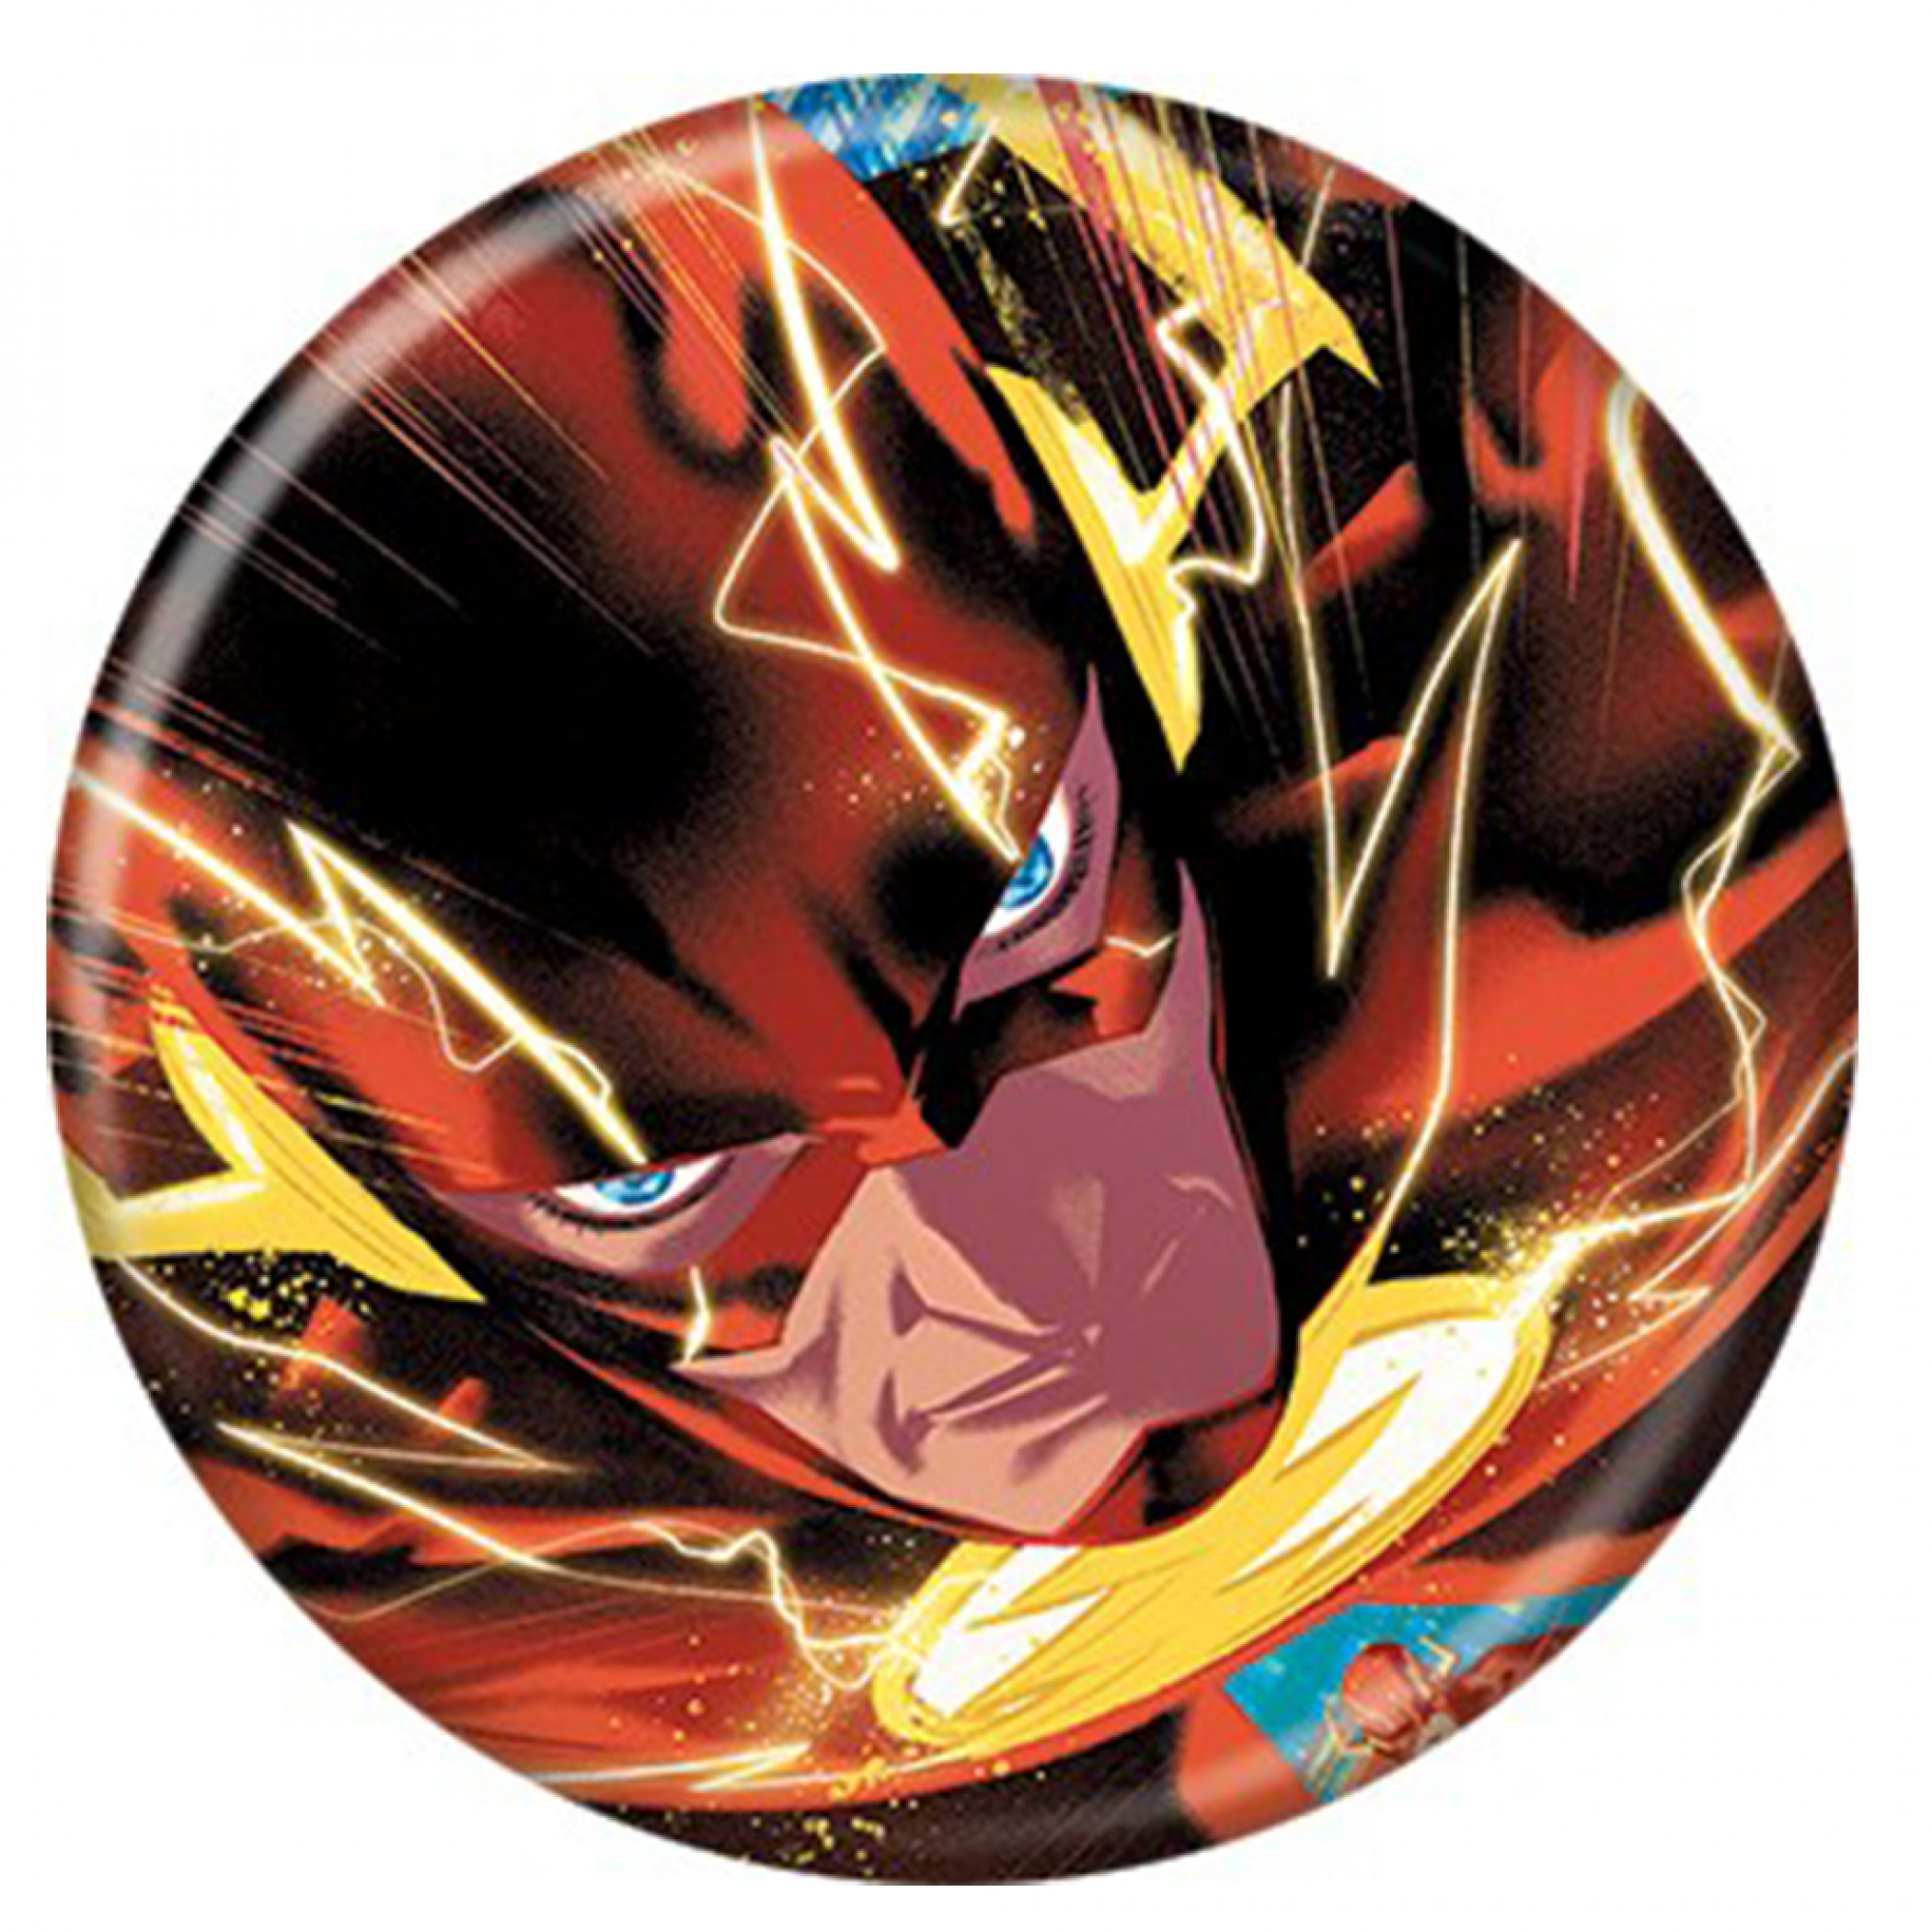 DC Comics The Flash #150 Variant Button